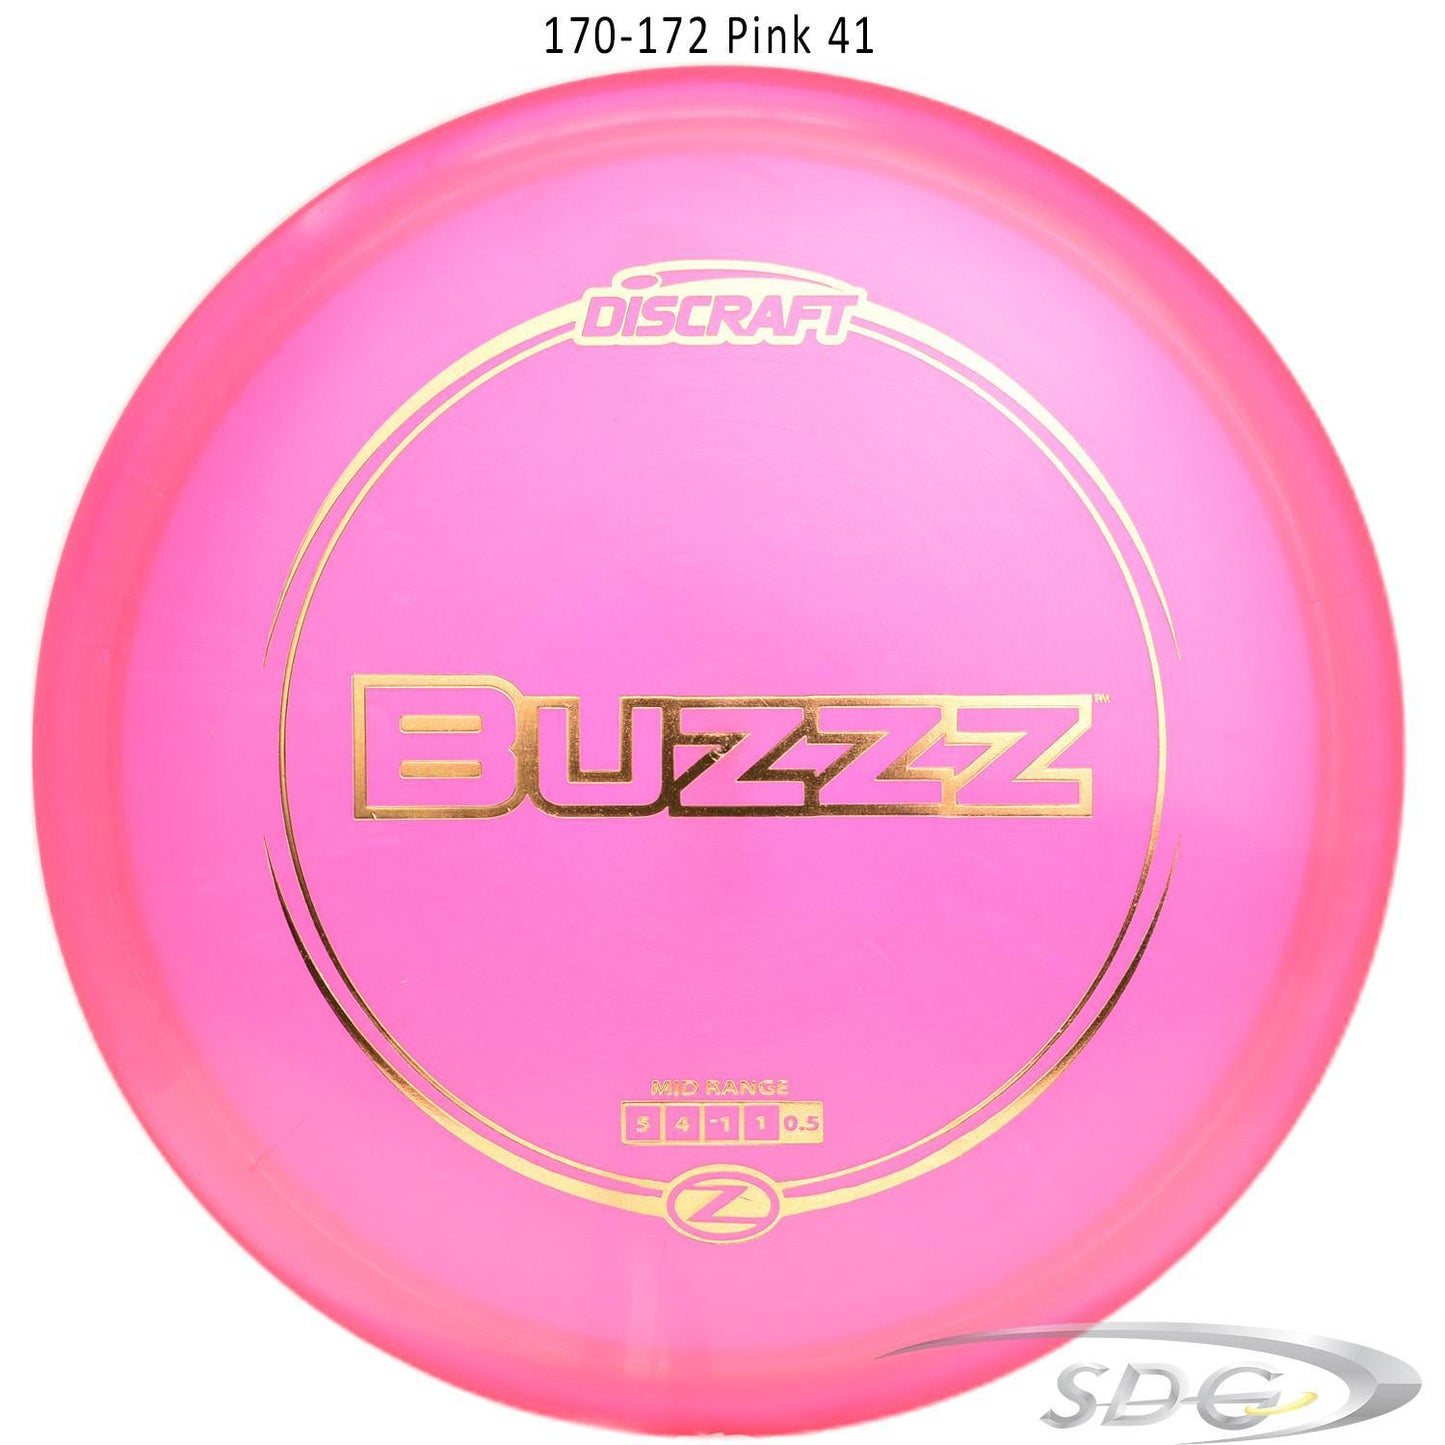 discraft-z-line-buzzz-disc-golf-mid-range-172-170-weights 170-172 Pink 41 